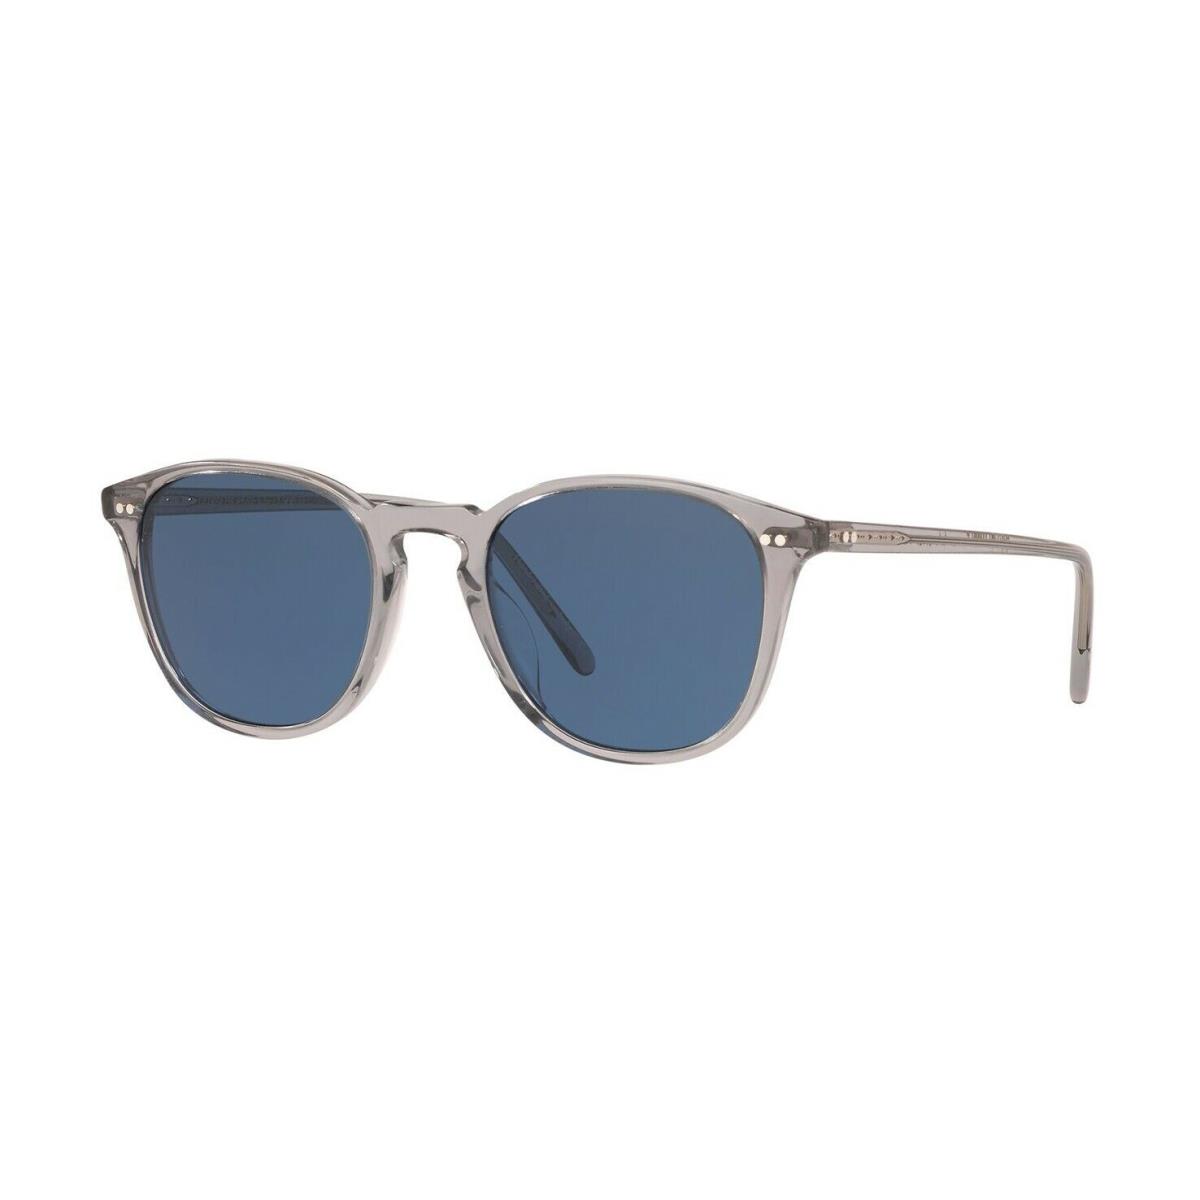 Oliver Peoples Forman L.a. OV 5414SU Workman Grey/blue Polarized Sunglasses - Frame: Workman Grey, Lens: Blue